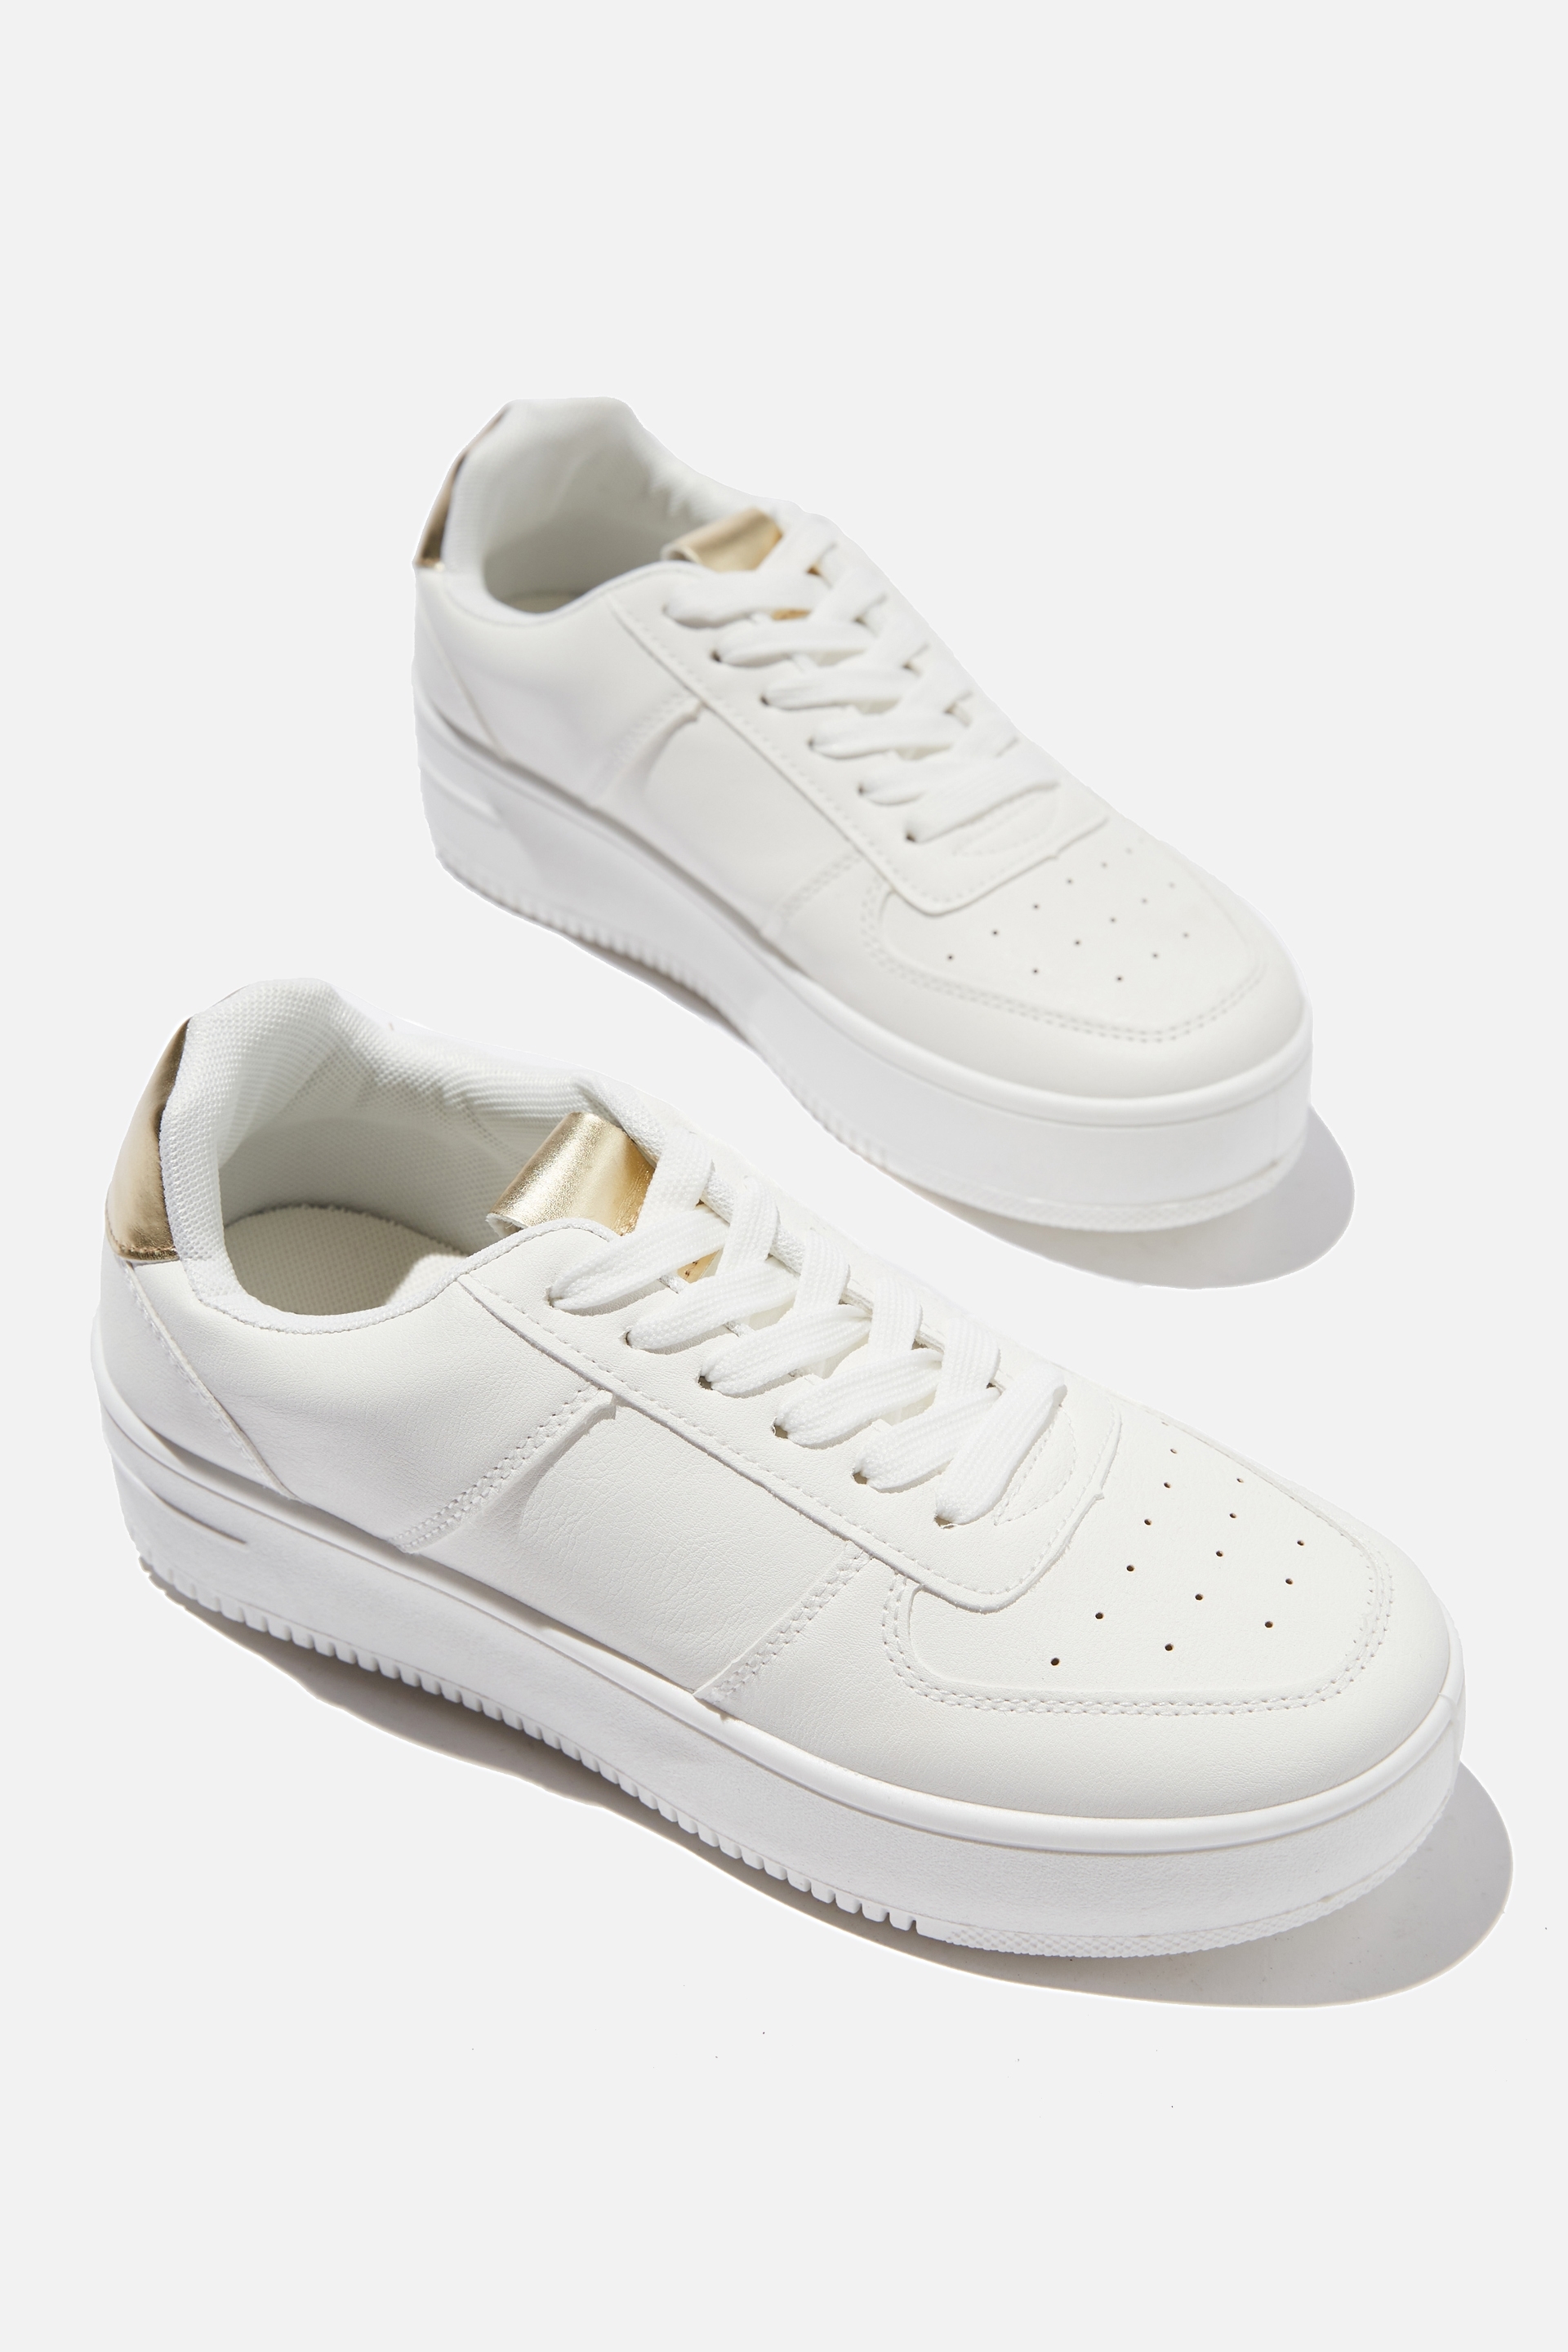 Rubi - Alexa Platform Sneaker - White gold